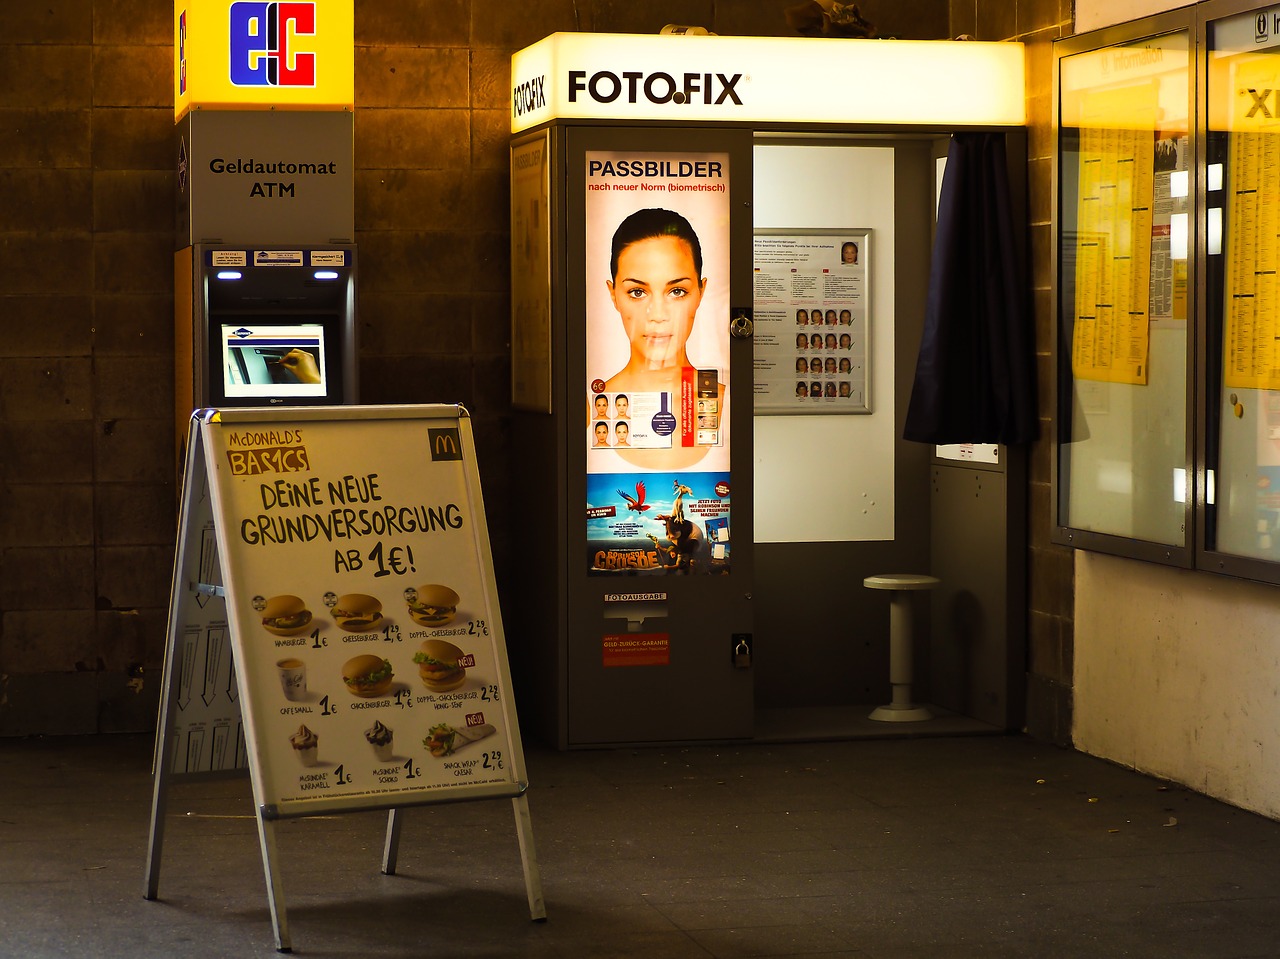 railway station photo booth fotofix free photo